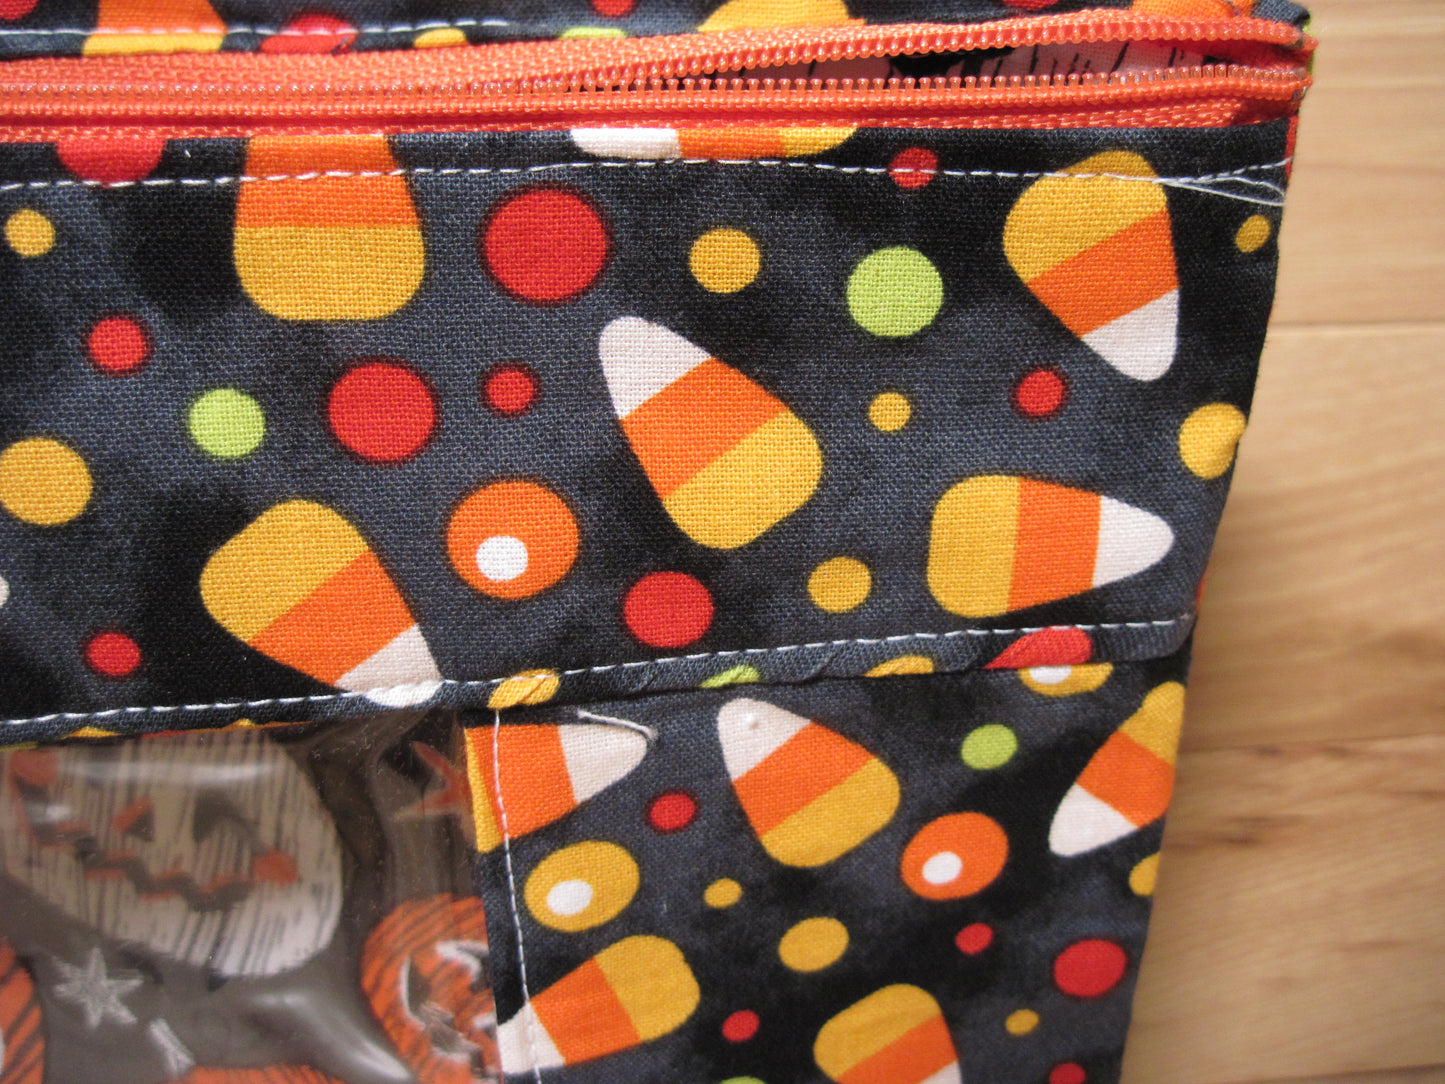 Medium Window Candy Corn with Pumpkins project bag